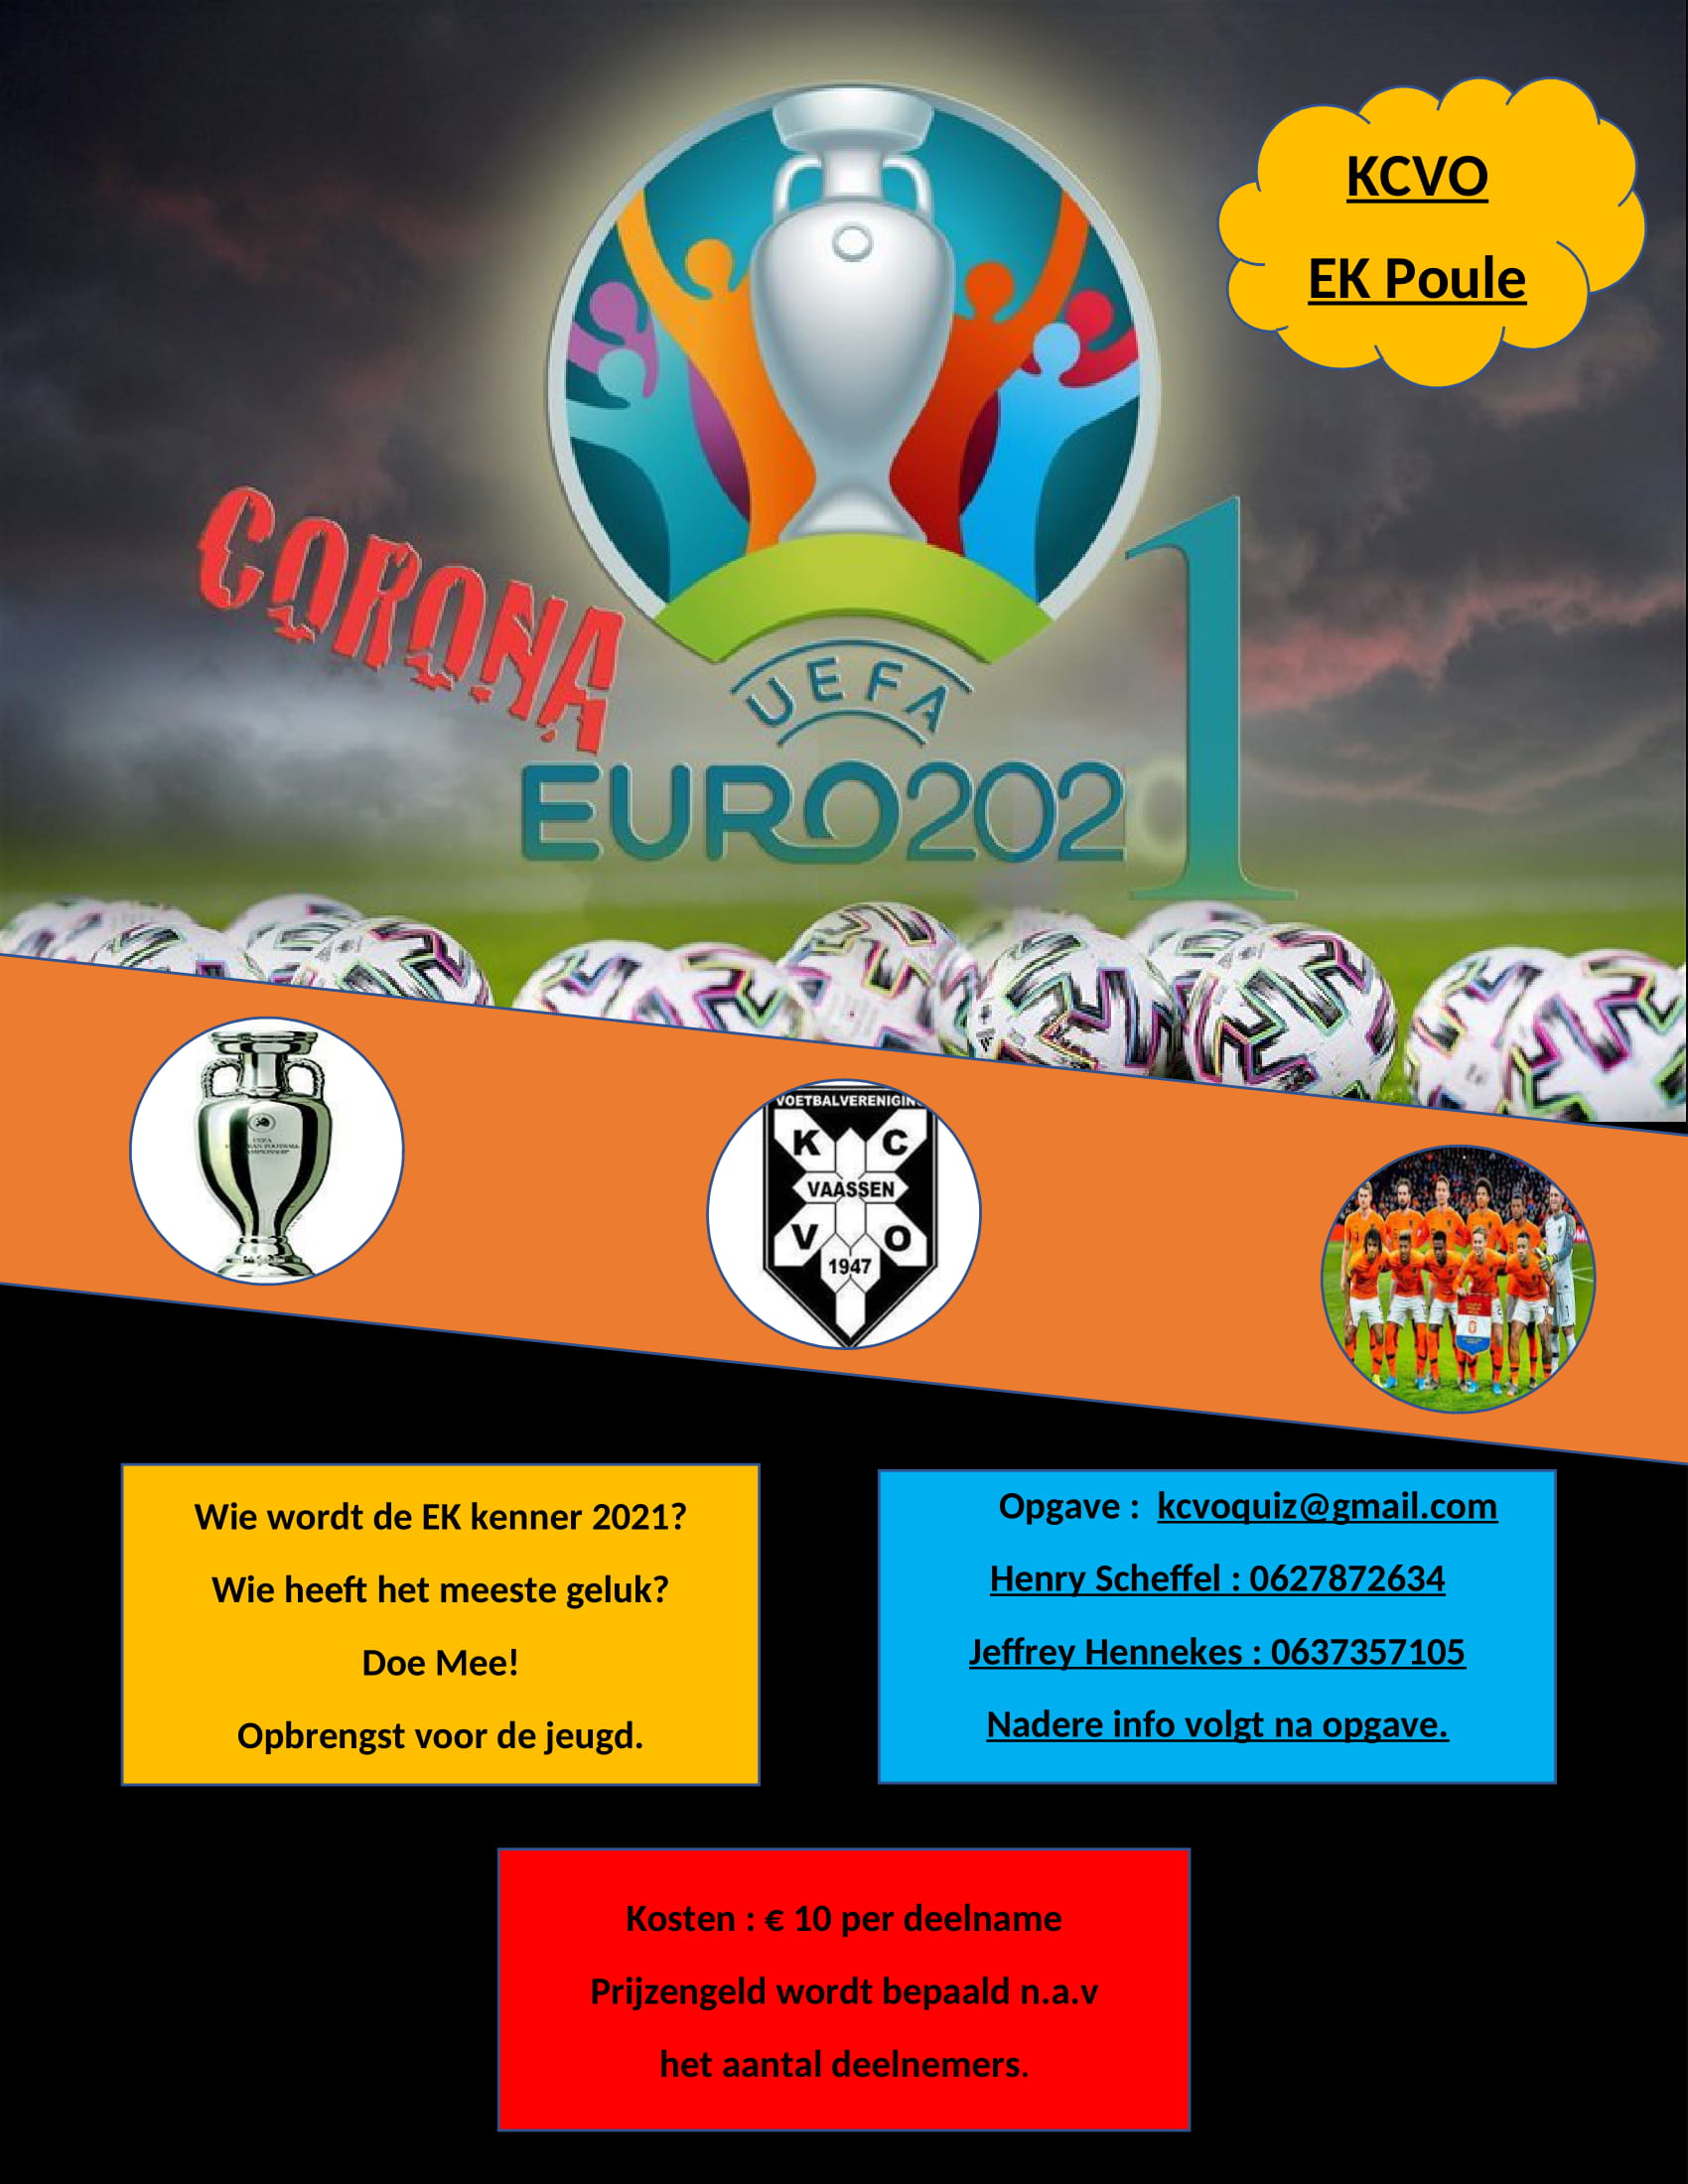 Corona Uefa EURO2020